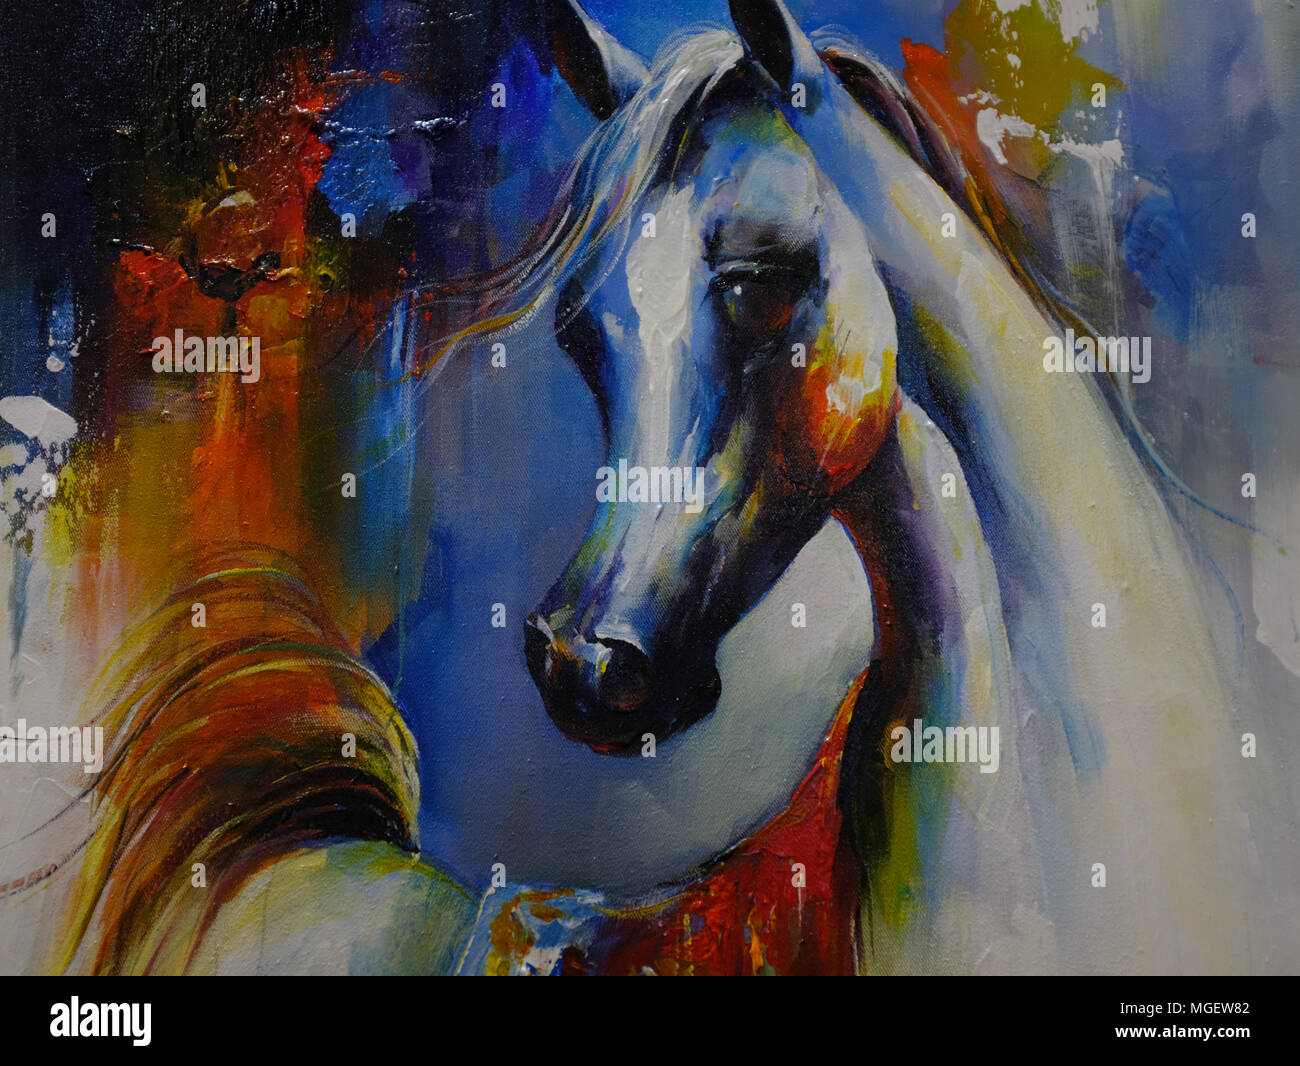 Creative artwork- Acrylic canvas paintings of horses Stock Photo